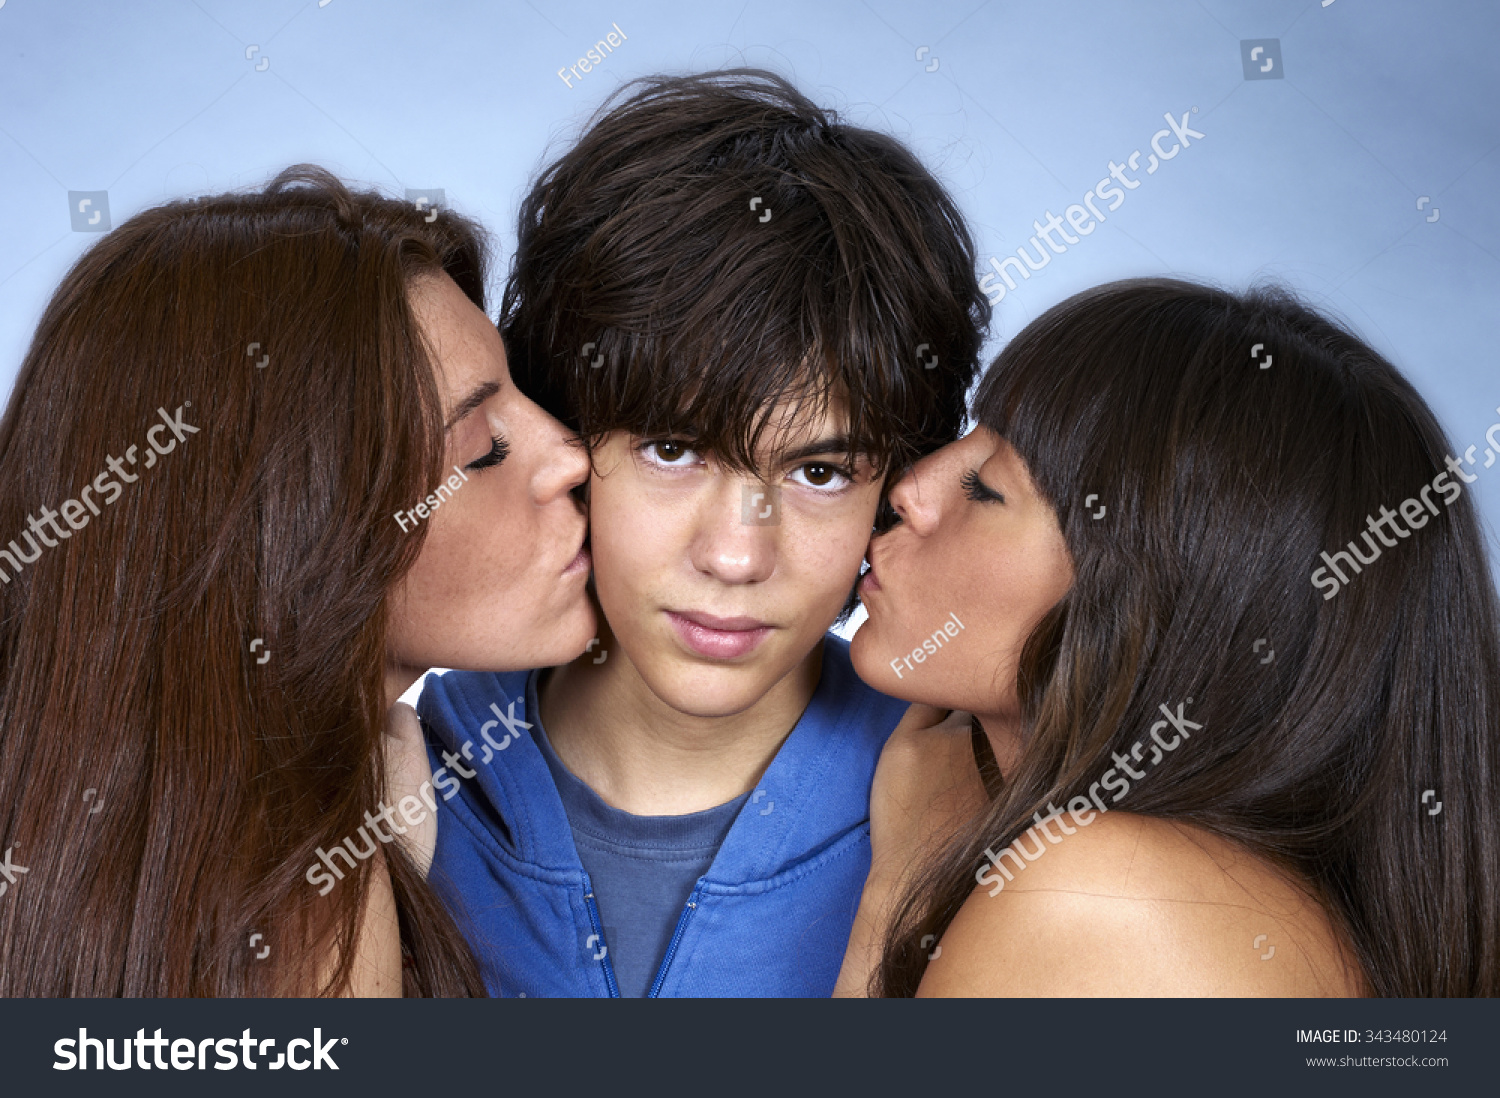 carol bays share woman kiss a boy photos